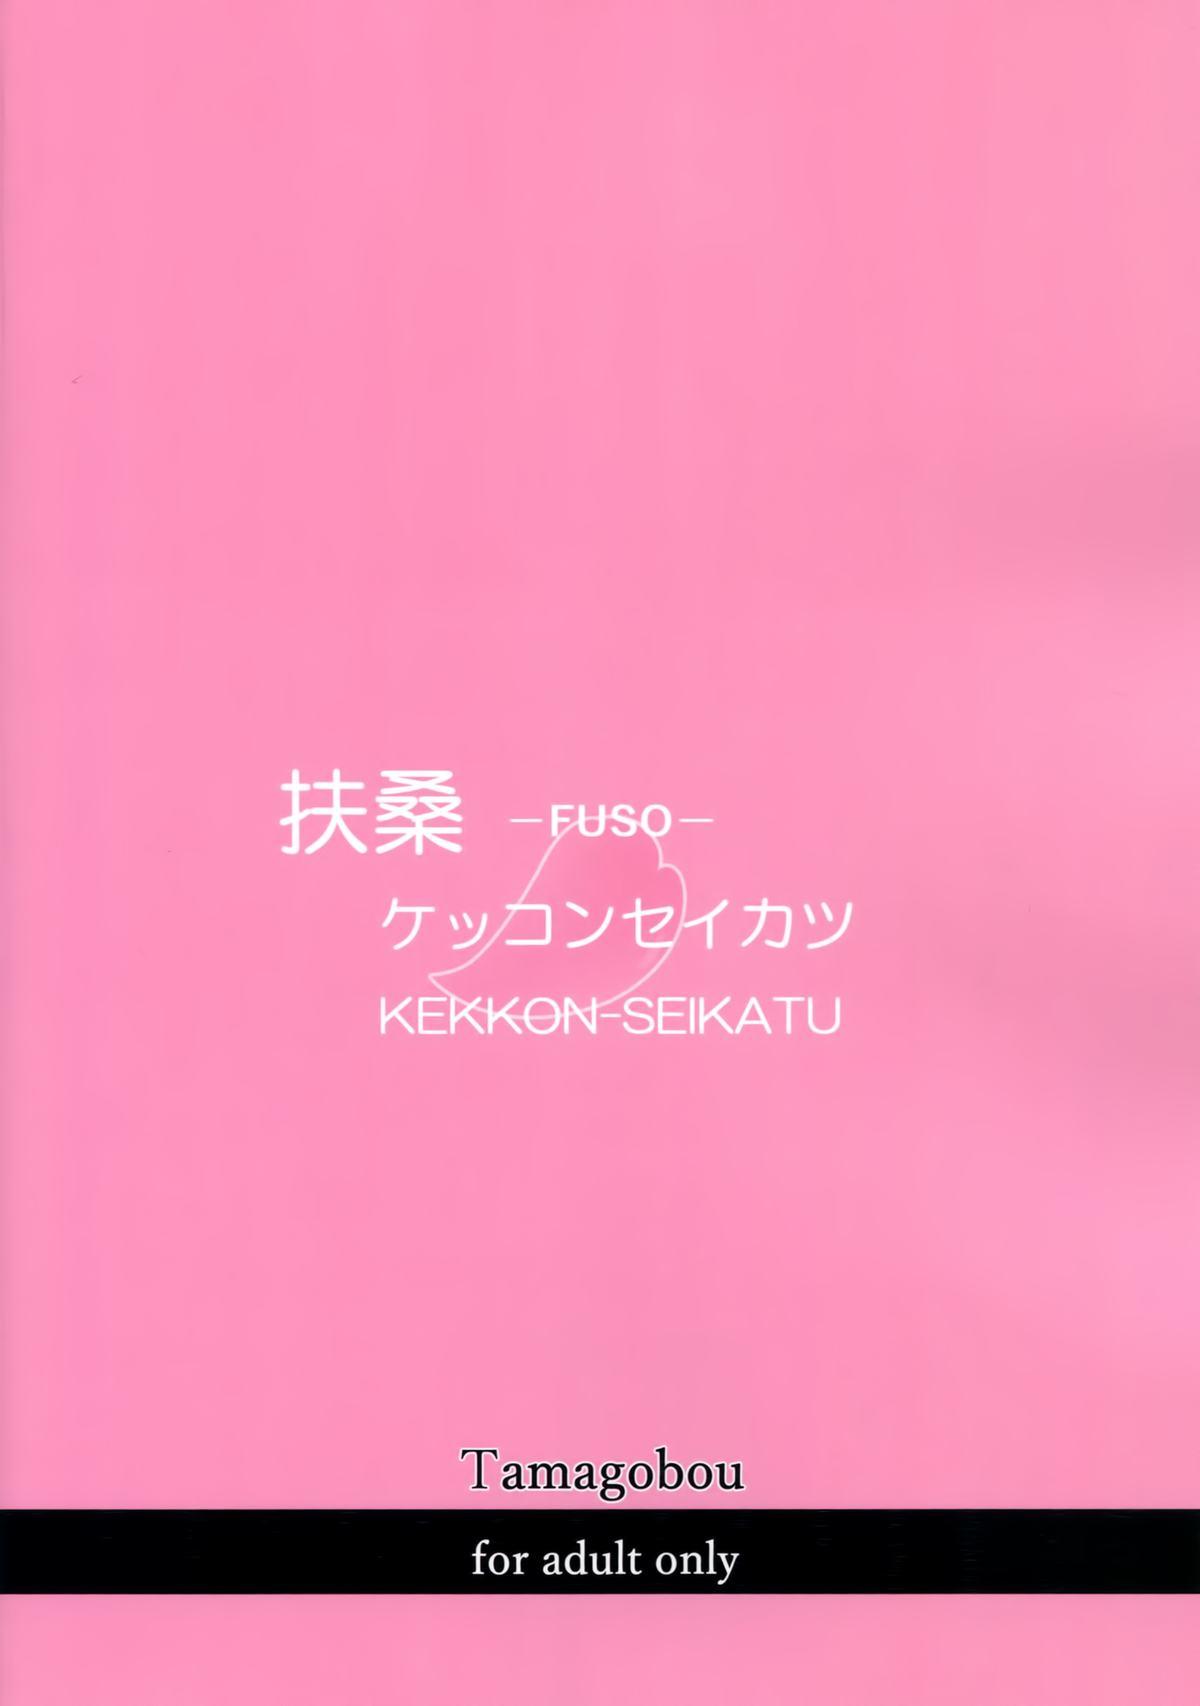 Fuso Kekkon-Seikatu 25